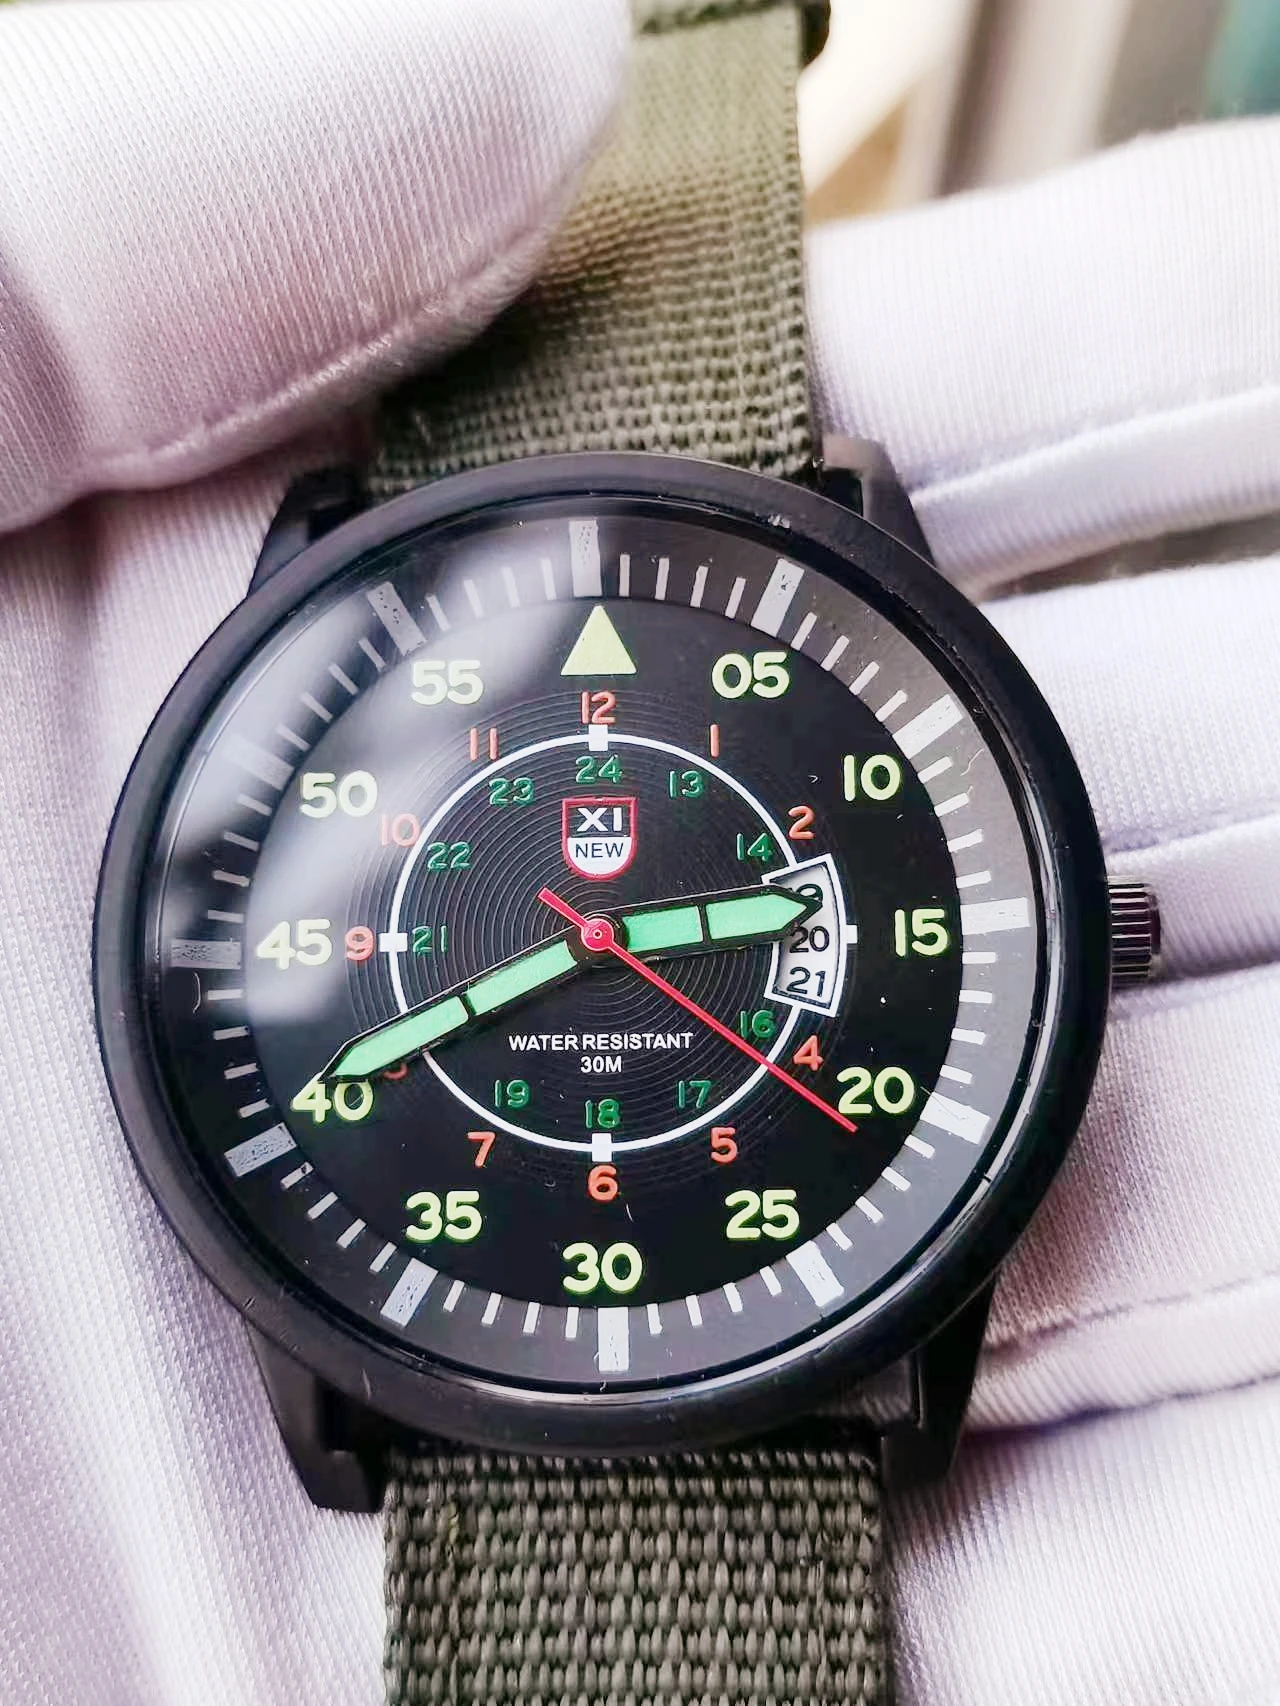 

1963 Chronometer Pilot Multi-function Luminous Display Tough Guy 1963 Watch Personality Retro Military Aviation Sports Men Clock